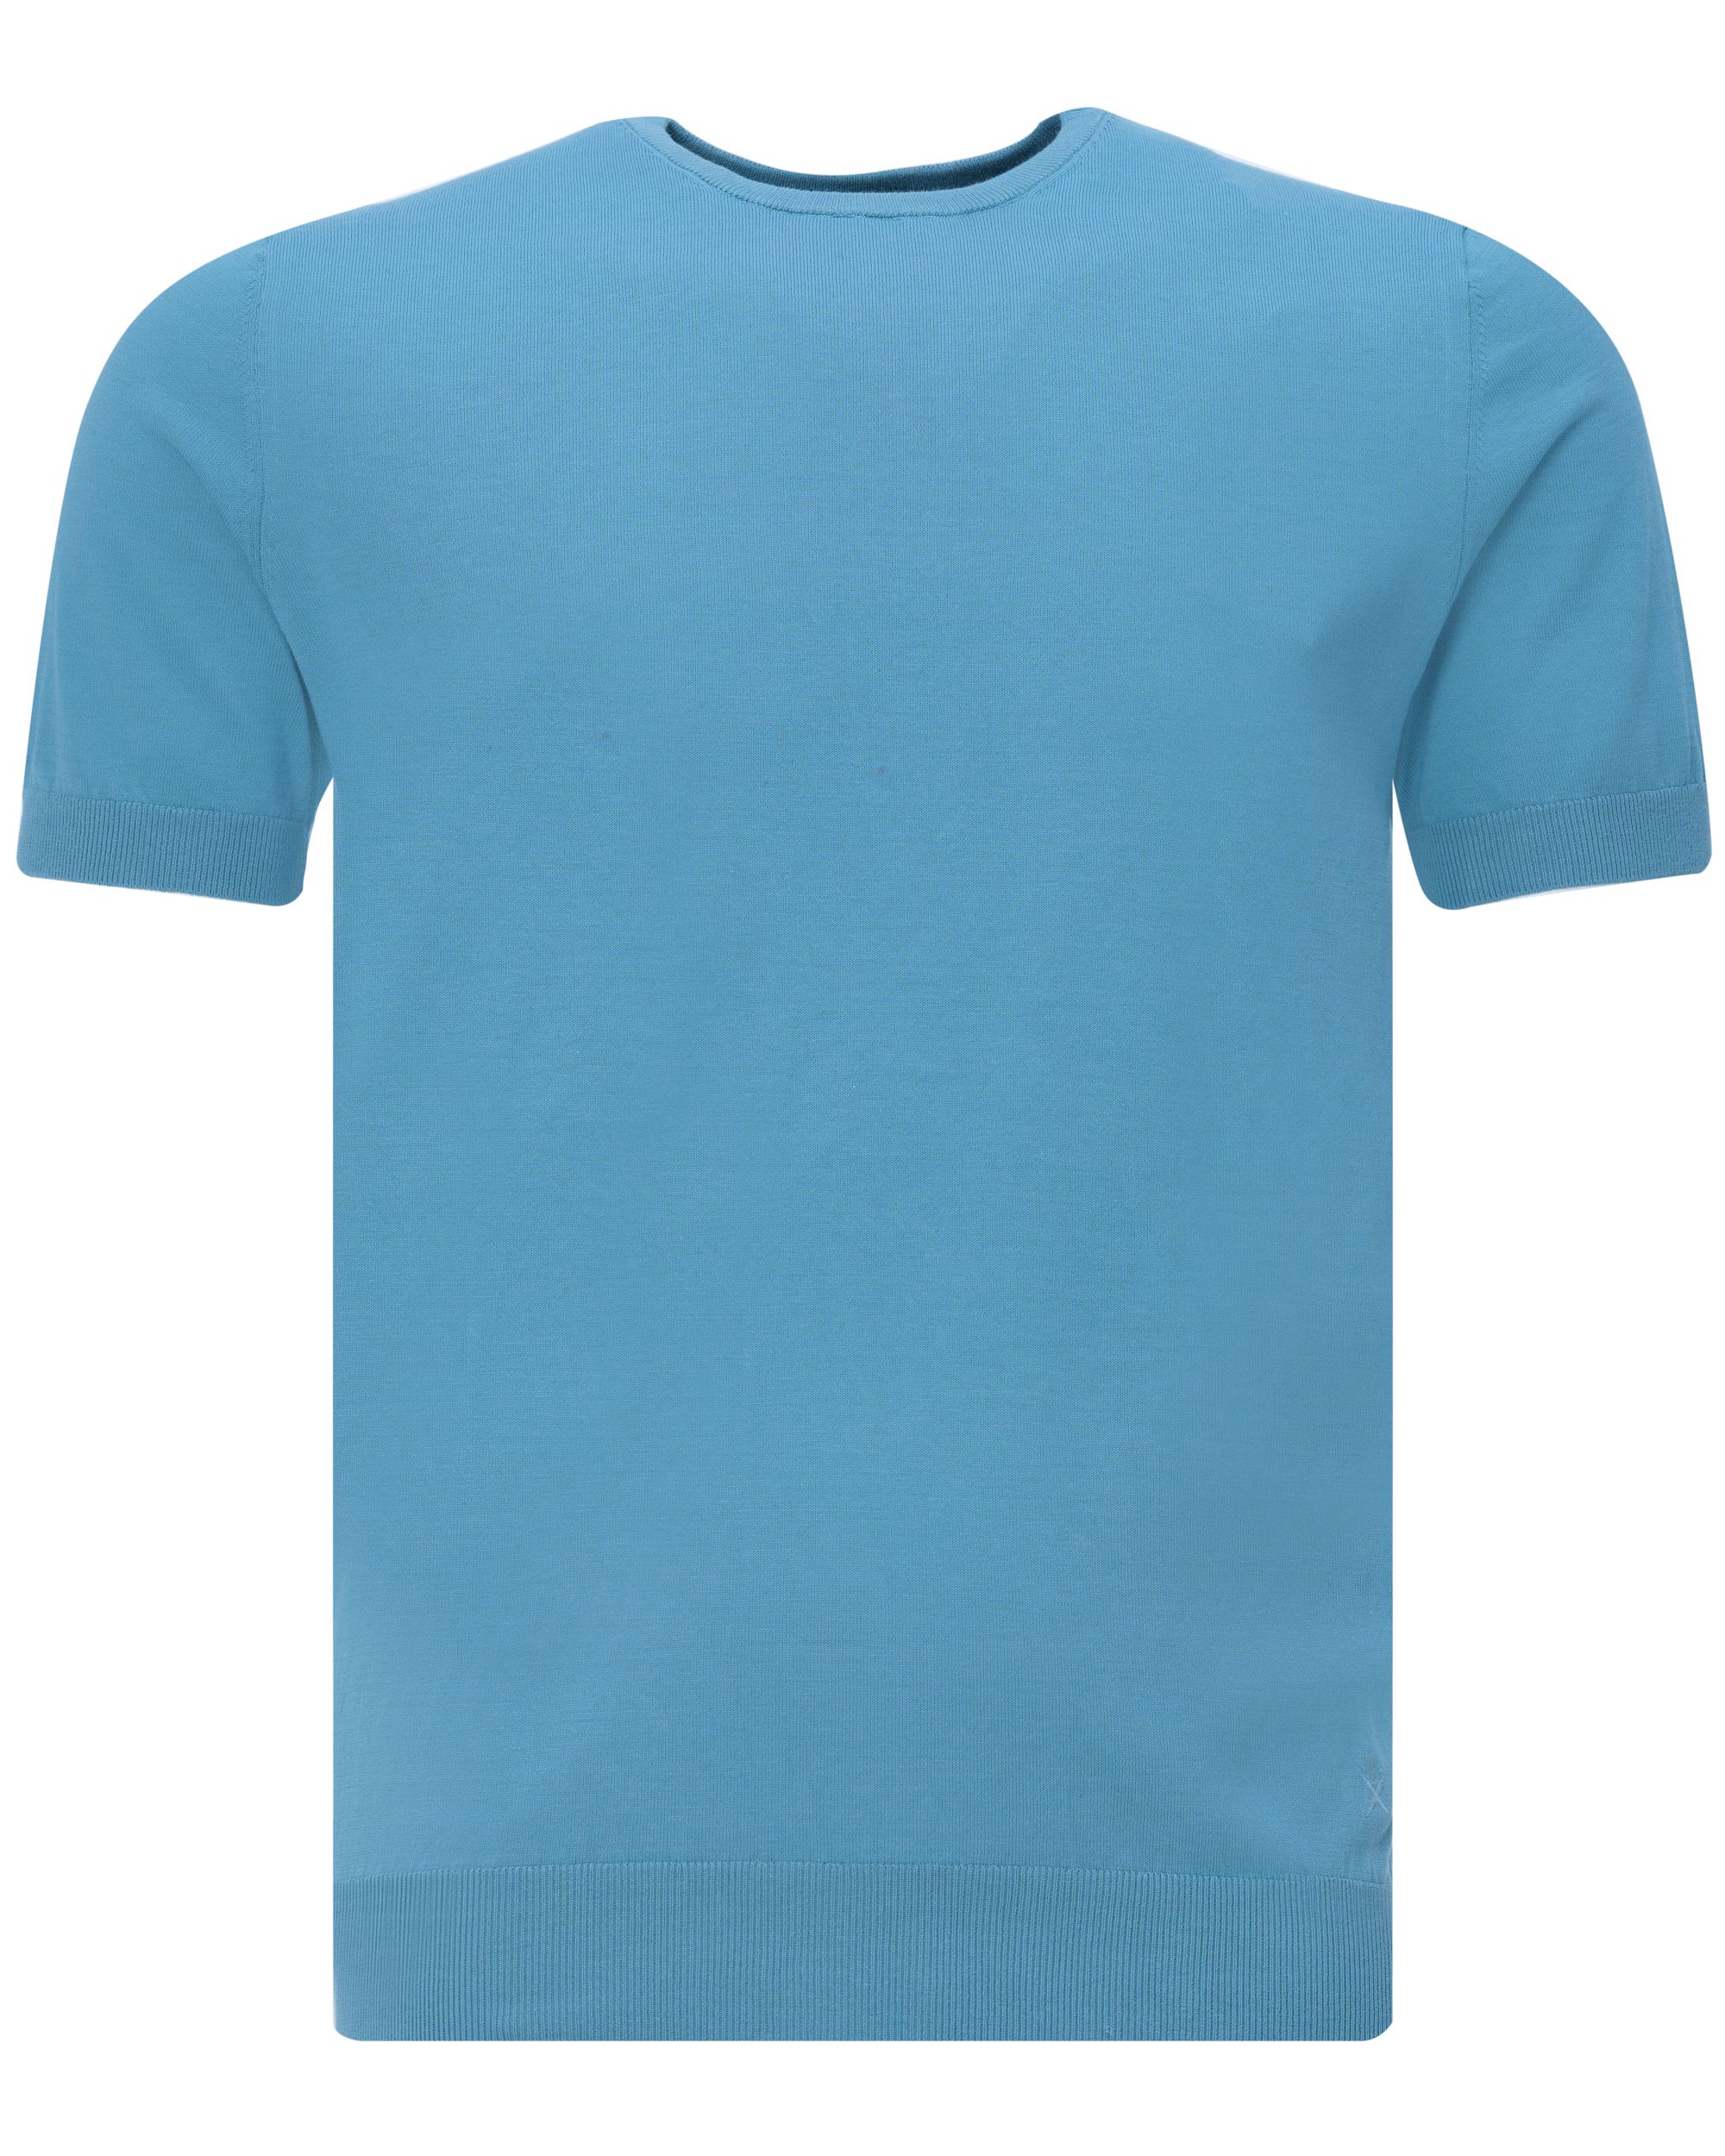 Dutch Dandies Dean T-shirt KM Adriatic Blue 073176-009-L